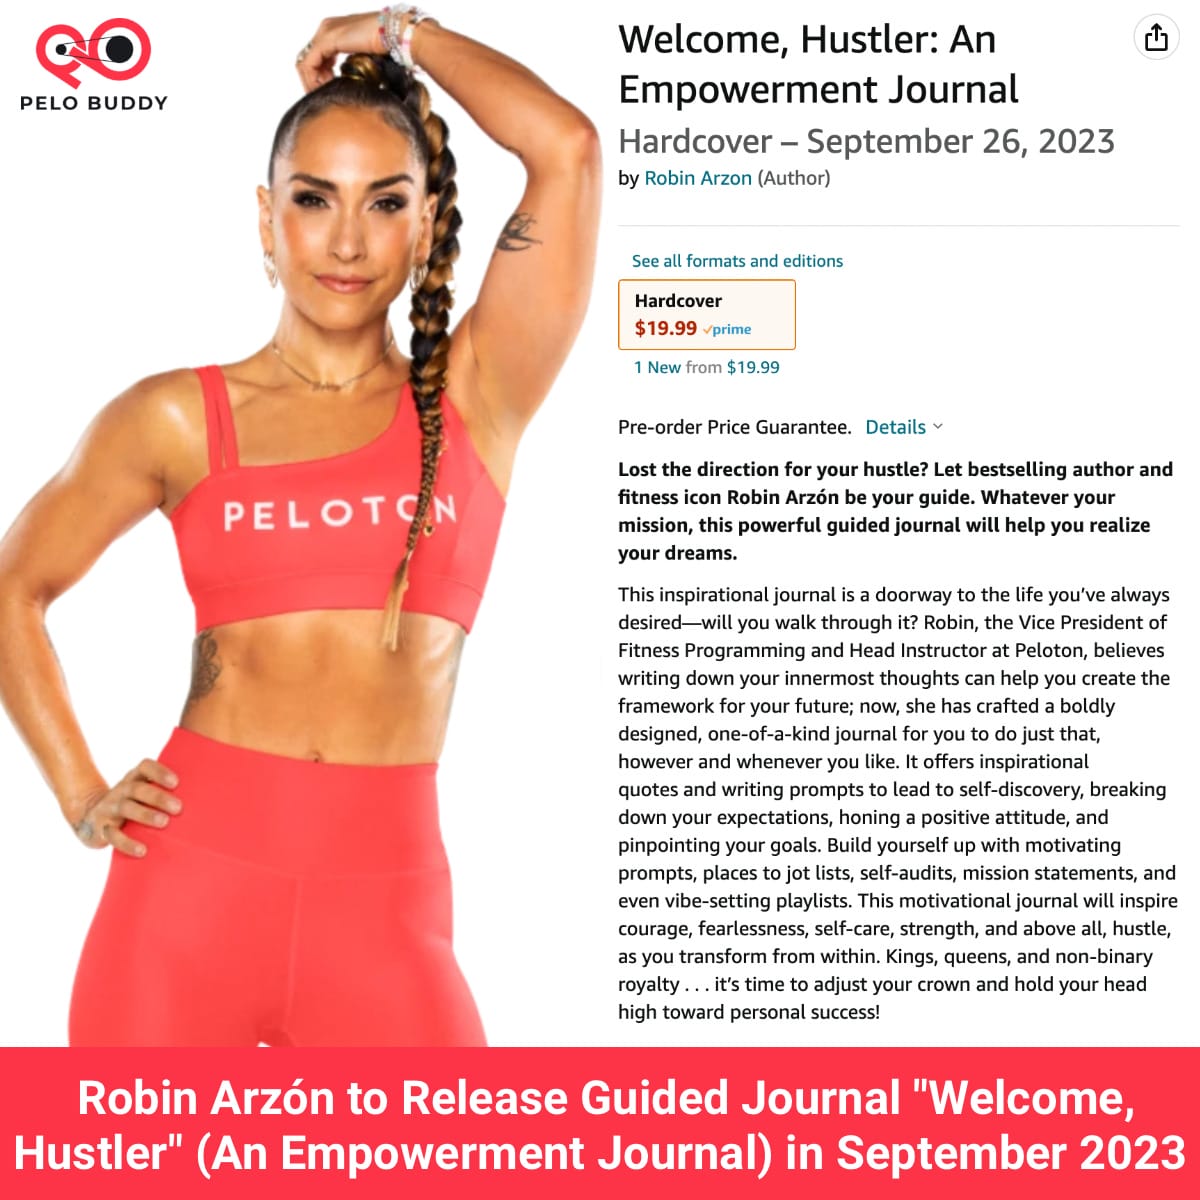 Peloton Instructor Robin Arzón to Release Guided Journal Book Welcome,  Hustler: An Empowerment Journal in September 2023 - Peloton Buddy